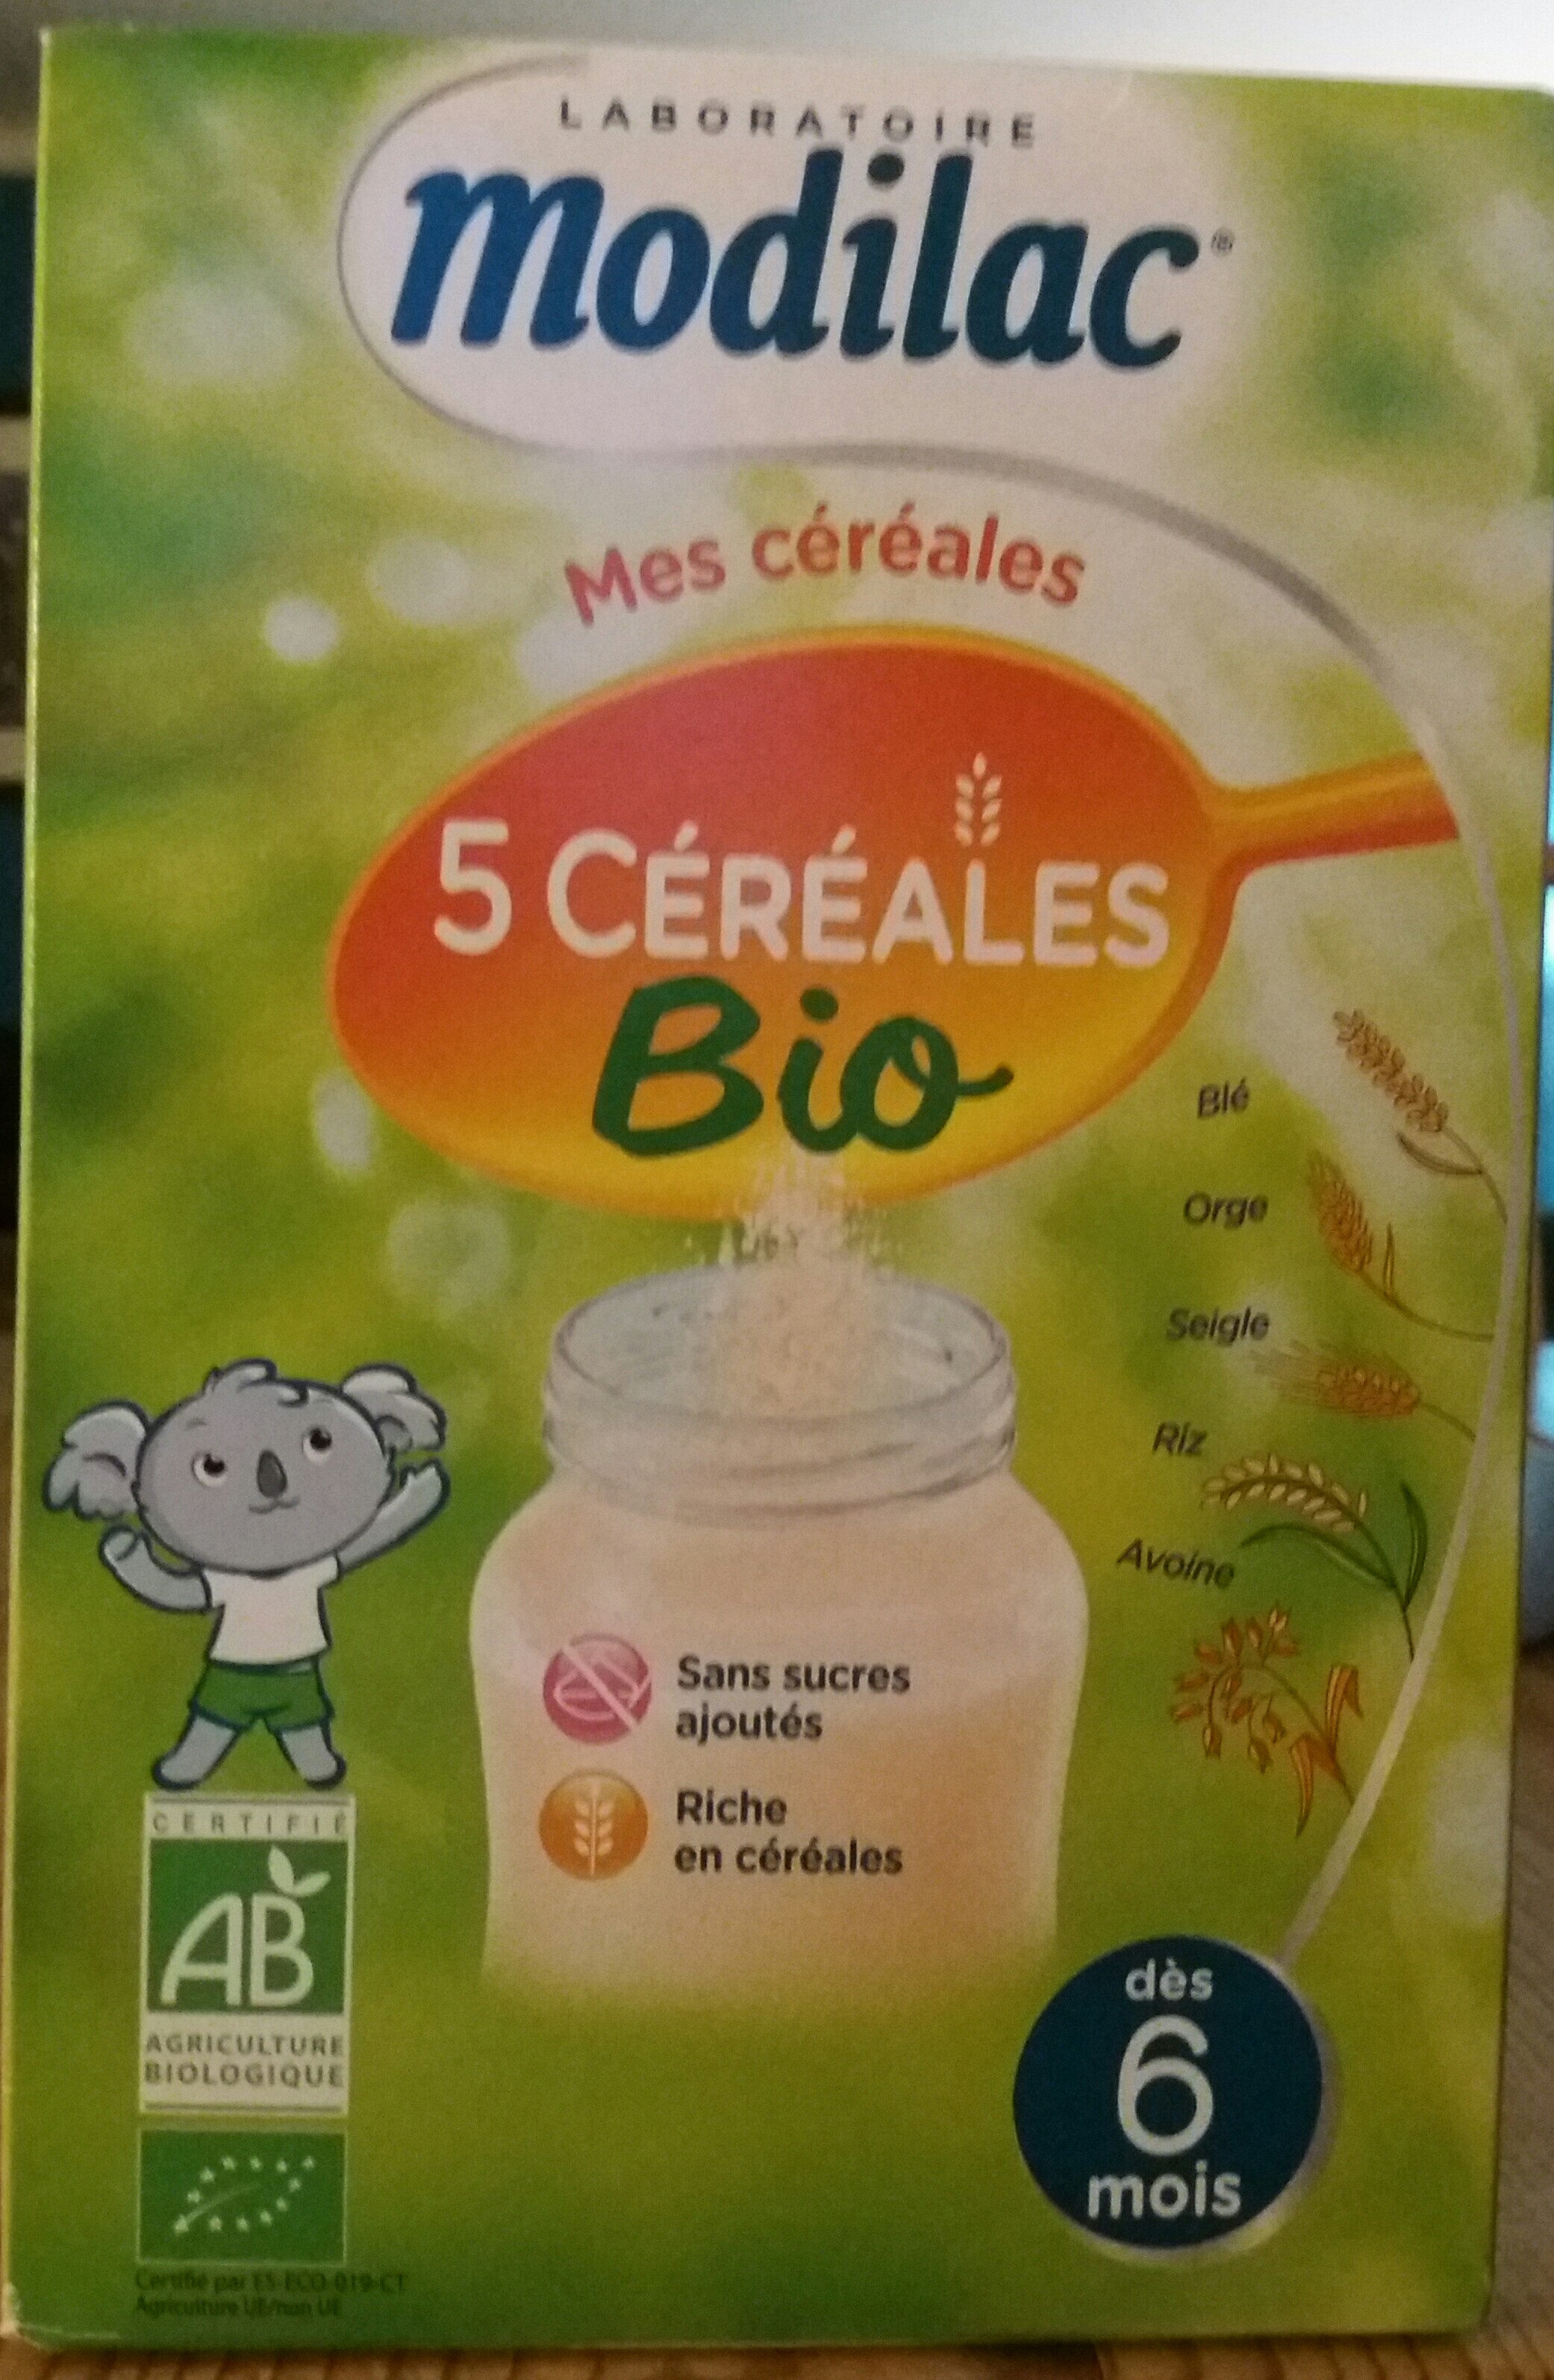 Modilac 5 Cereales Bio - Product - fr